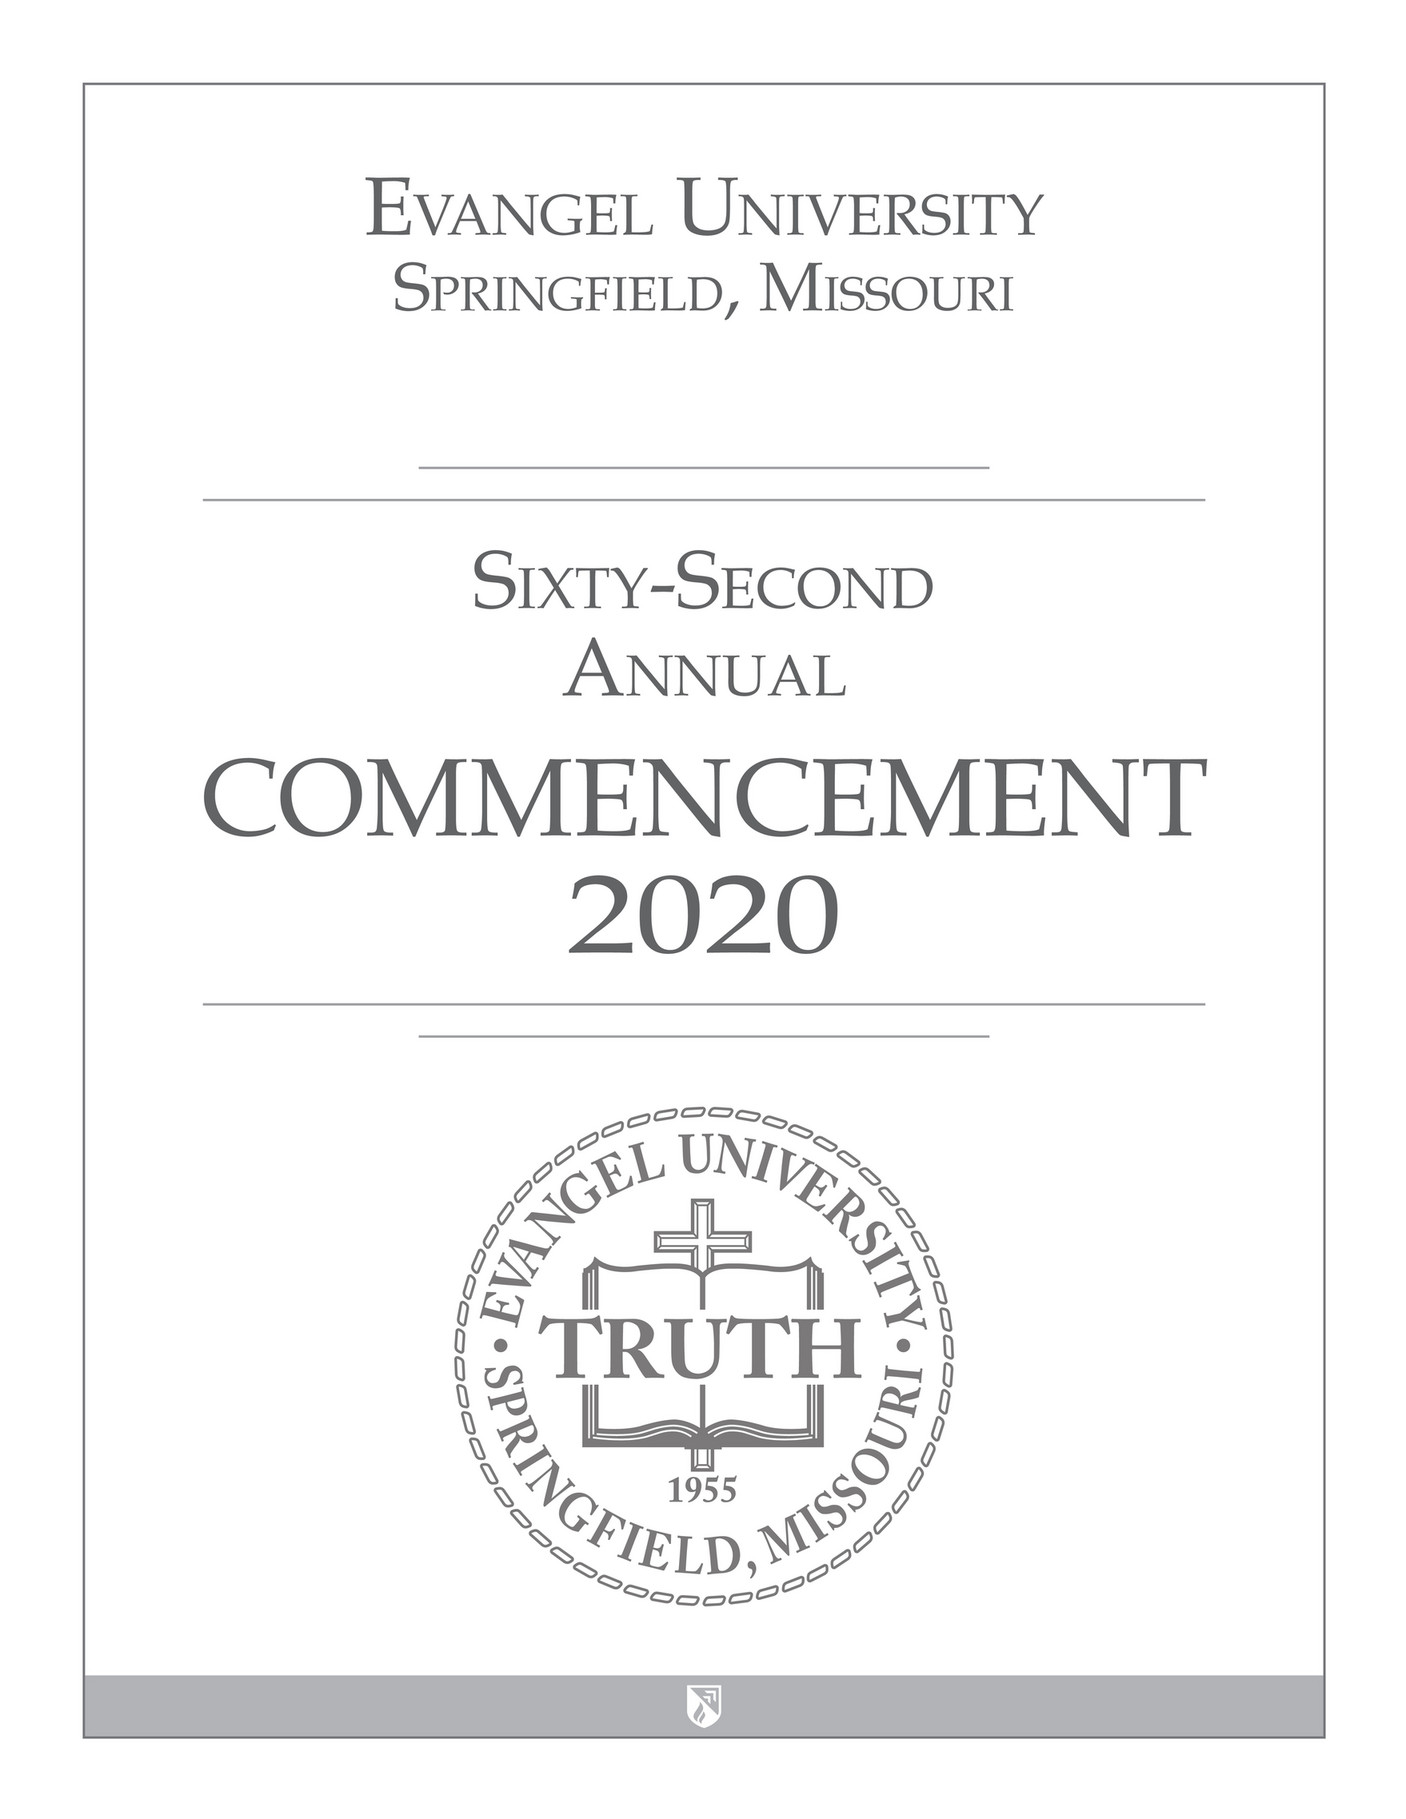 evangel-university-2020-commencement-program-page-1